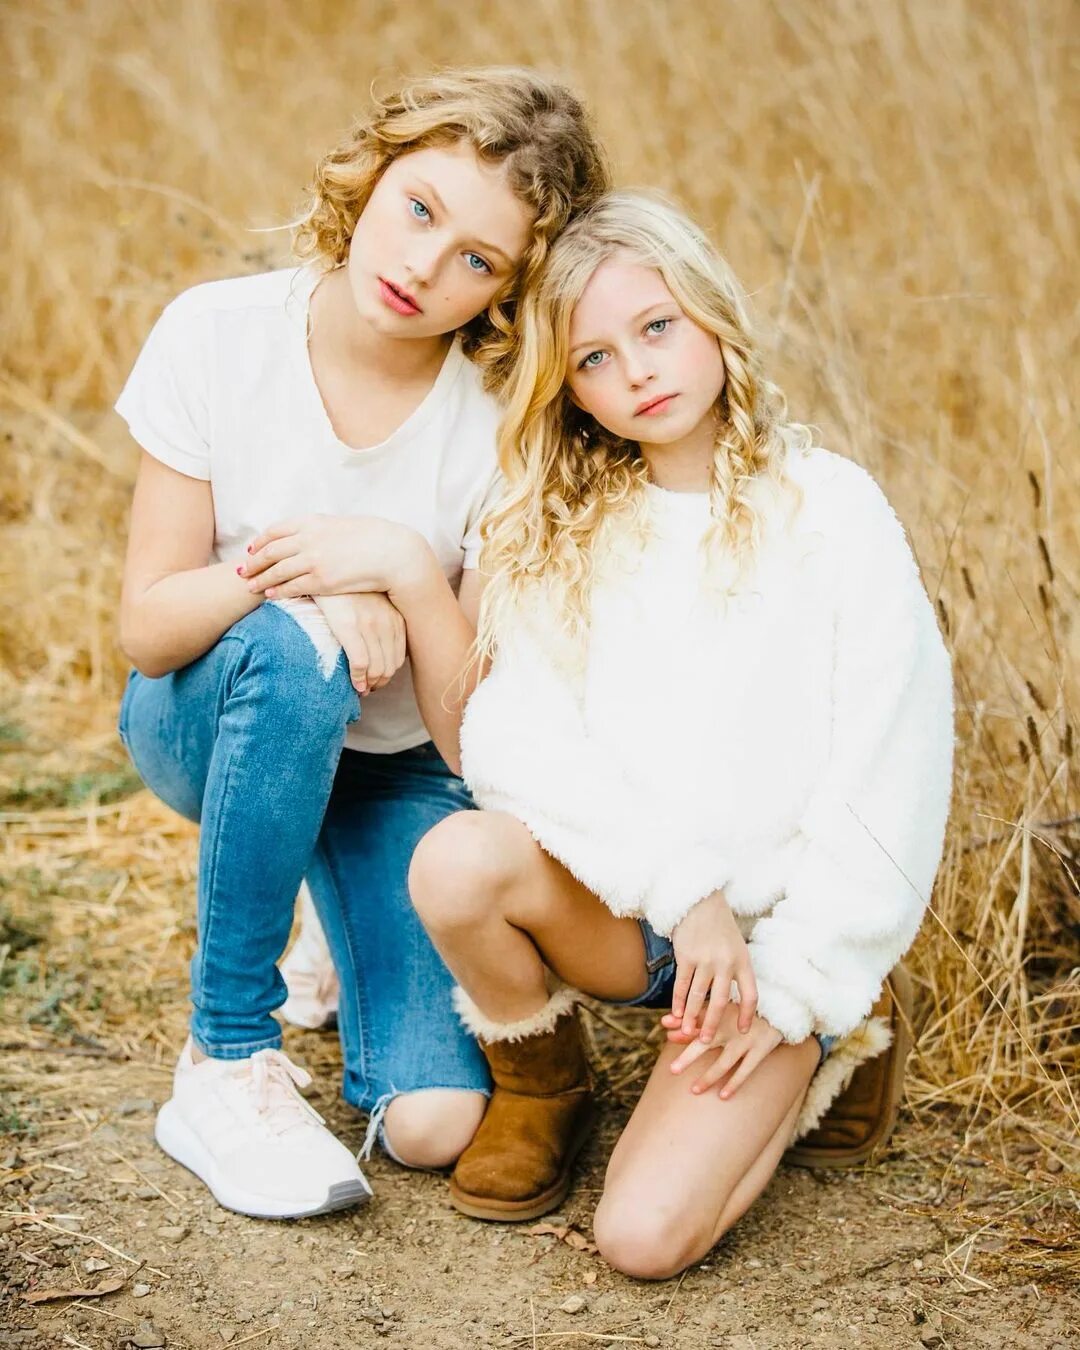 Rebecca Gayheart on Instagram: "Sisters ðŸ¤Ž #mygirls #BB&GG #autumn...